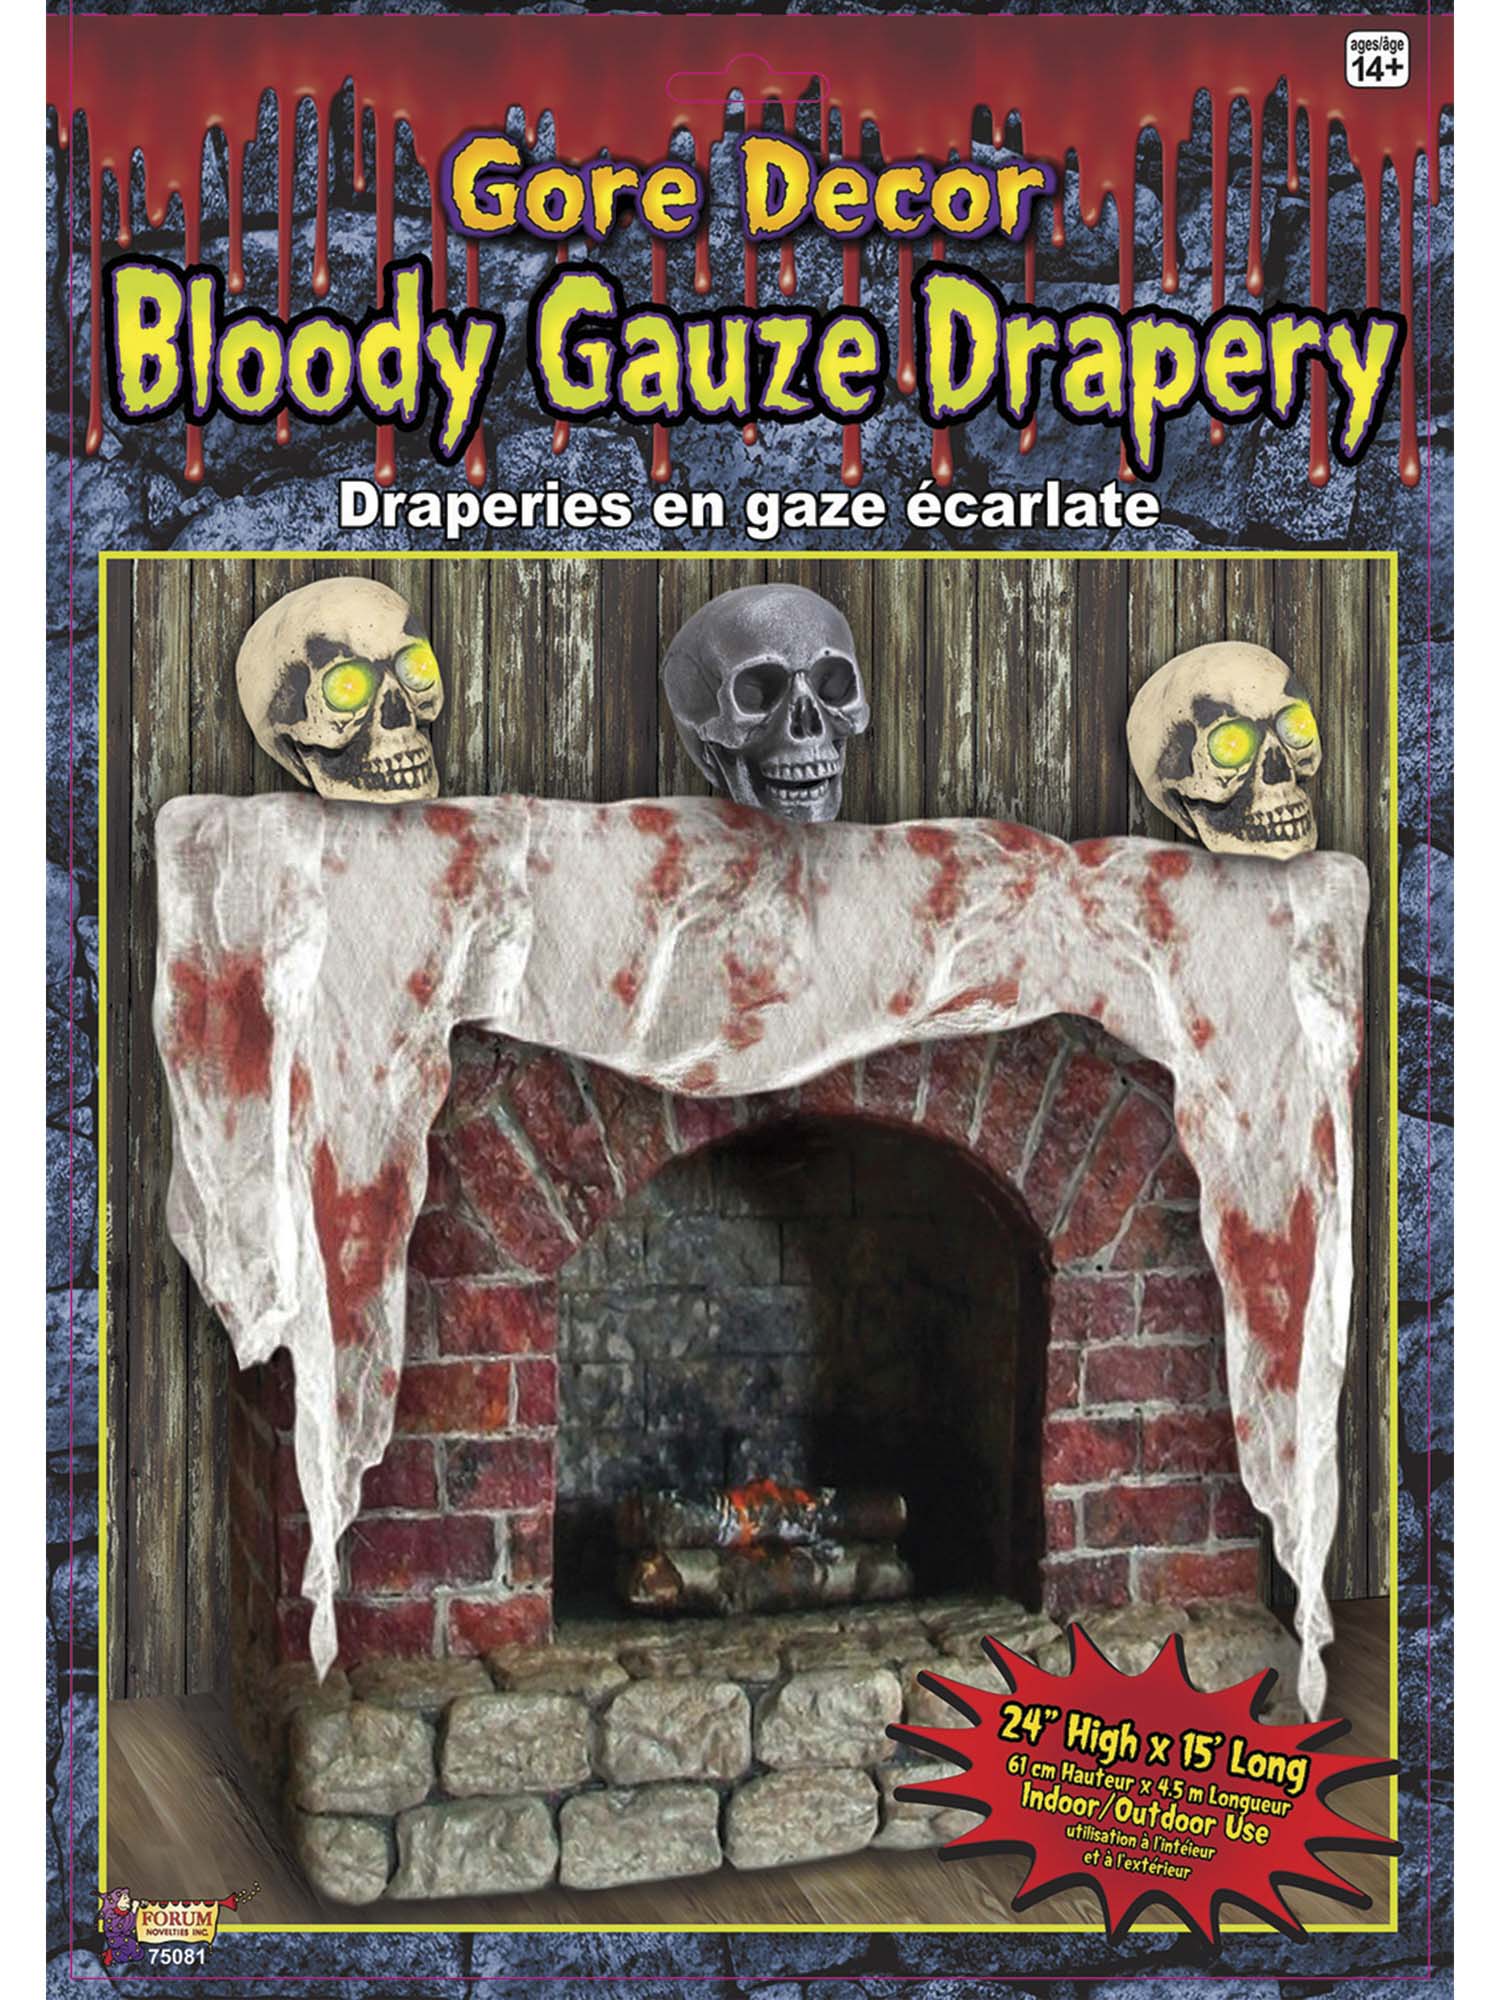 24-inch Bloody Gauze Drapery Decoration - costumes.com